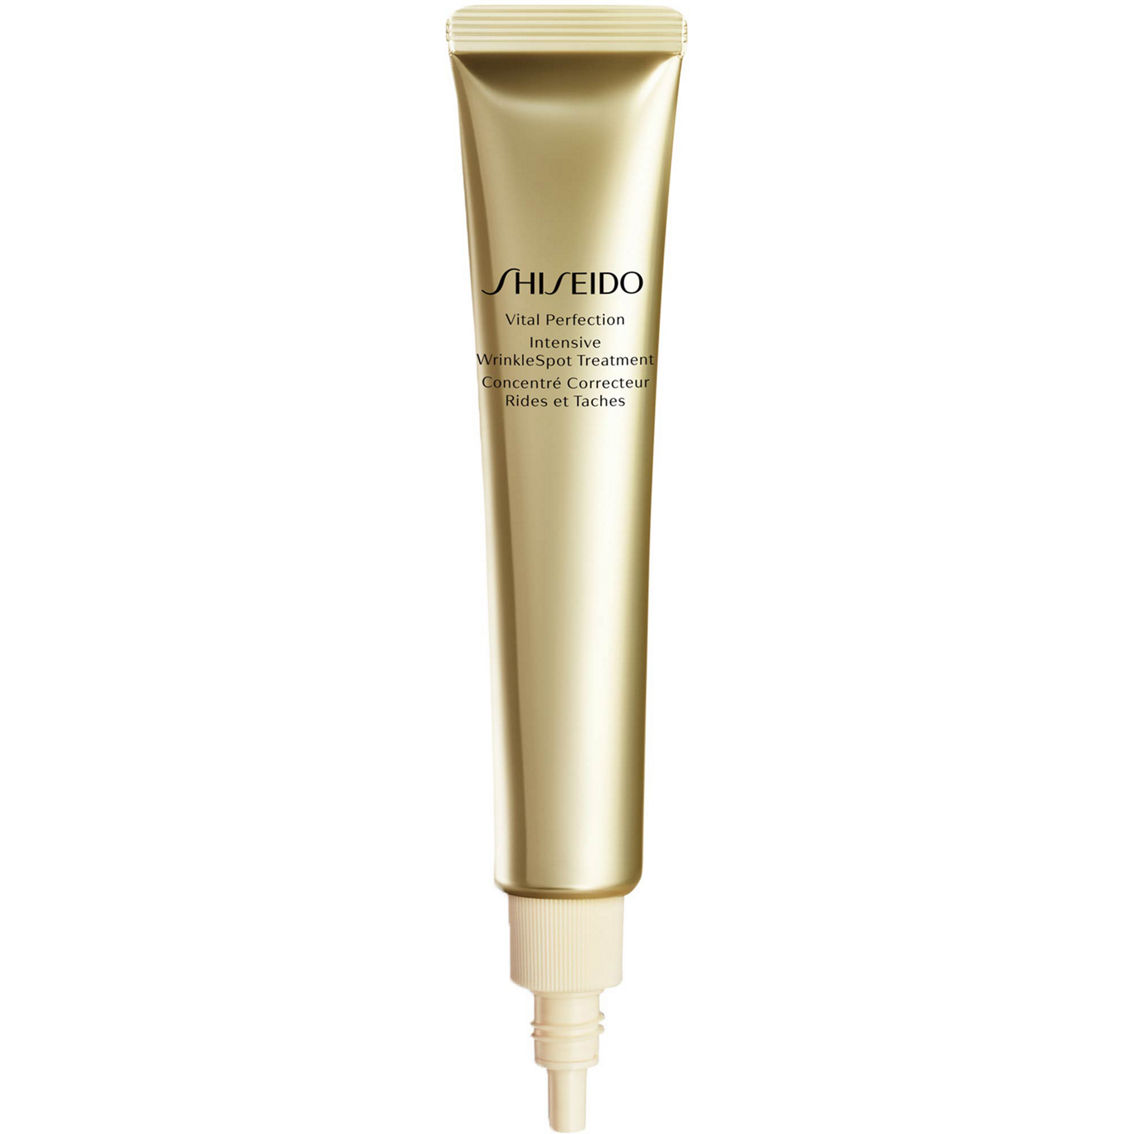 Shiseido Vital Perfection Intensive WrinkleSpot Treatment - Image 2 of 8